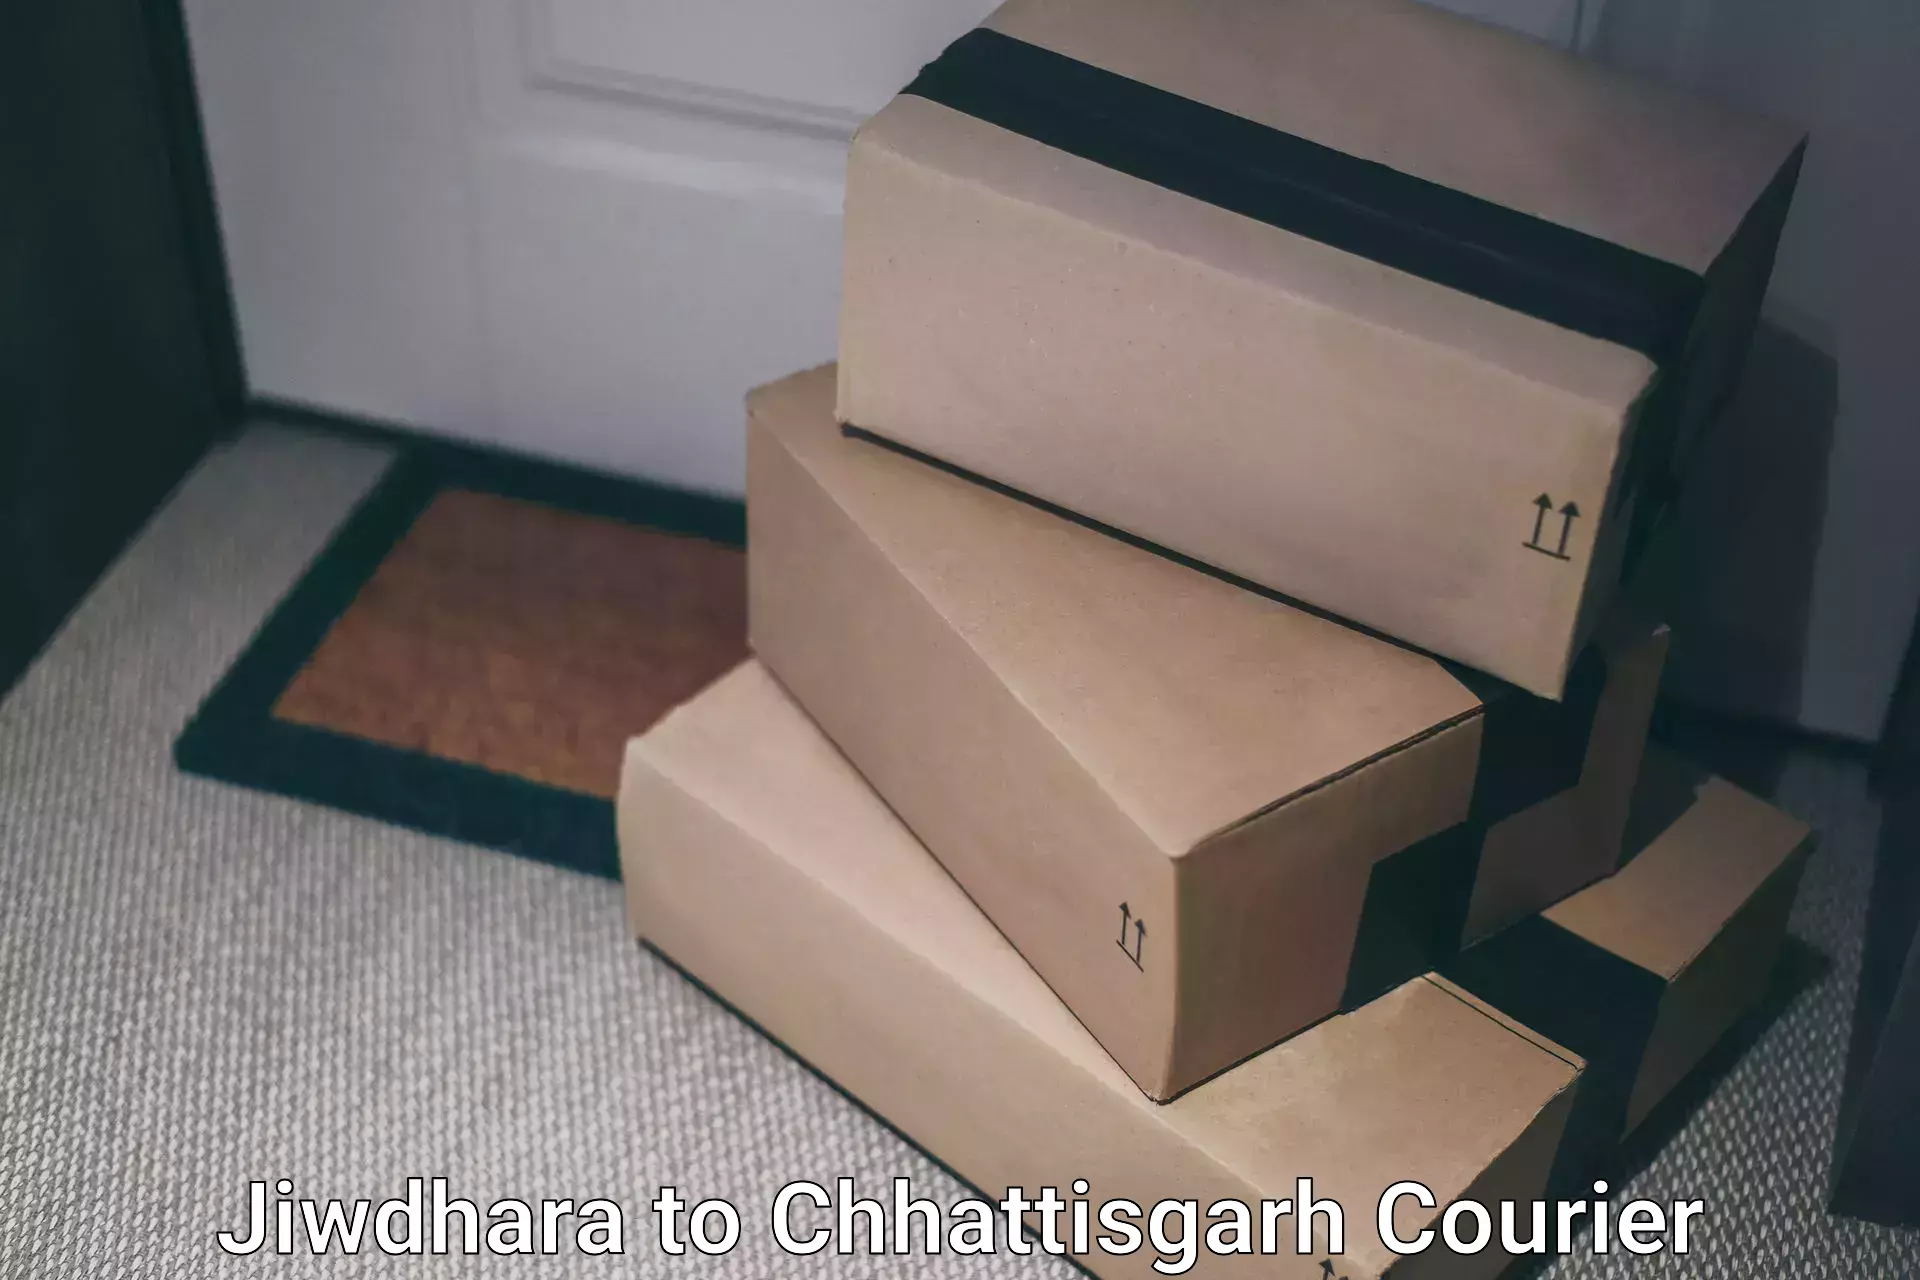 Courier service booking Jiwdhara to Chhattisgarh